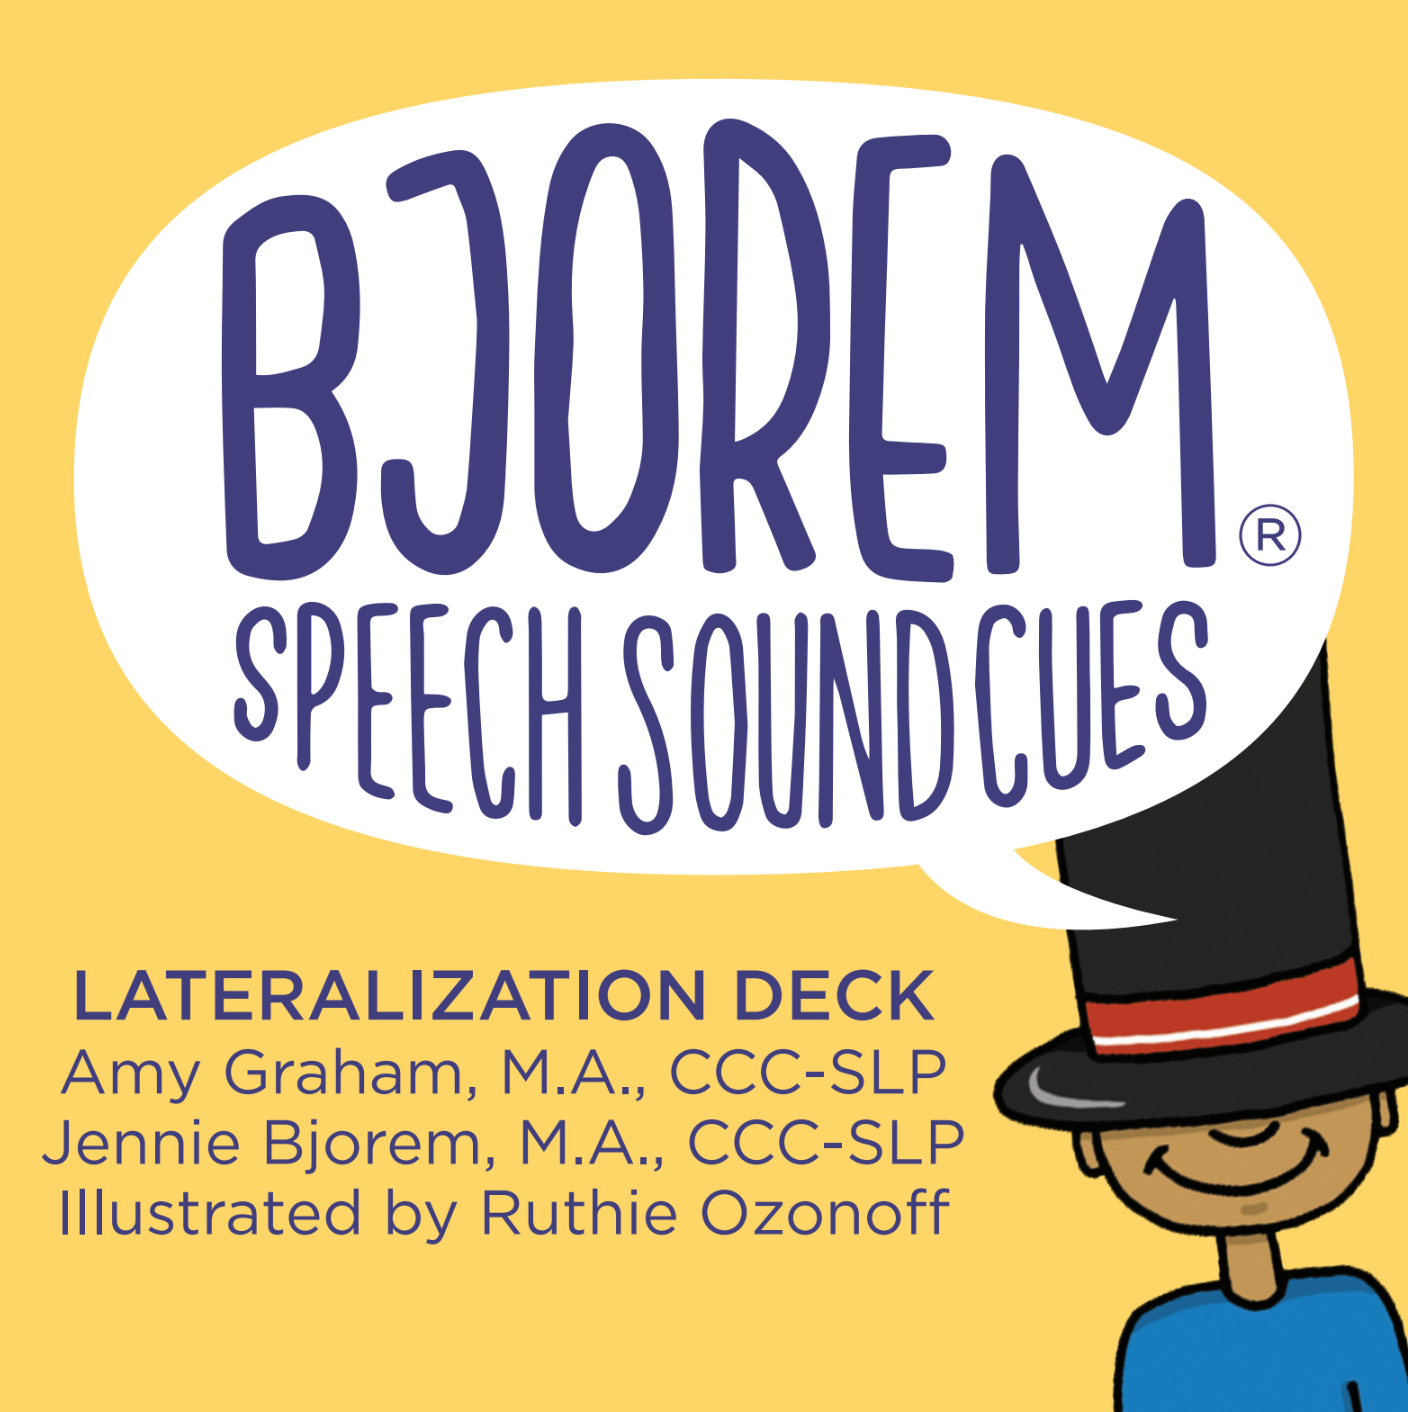 Bjorem Speech Sound Cues Lateralization